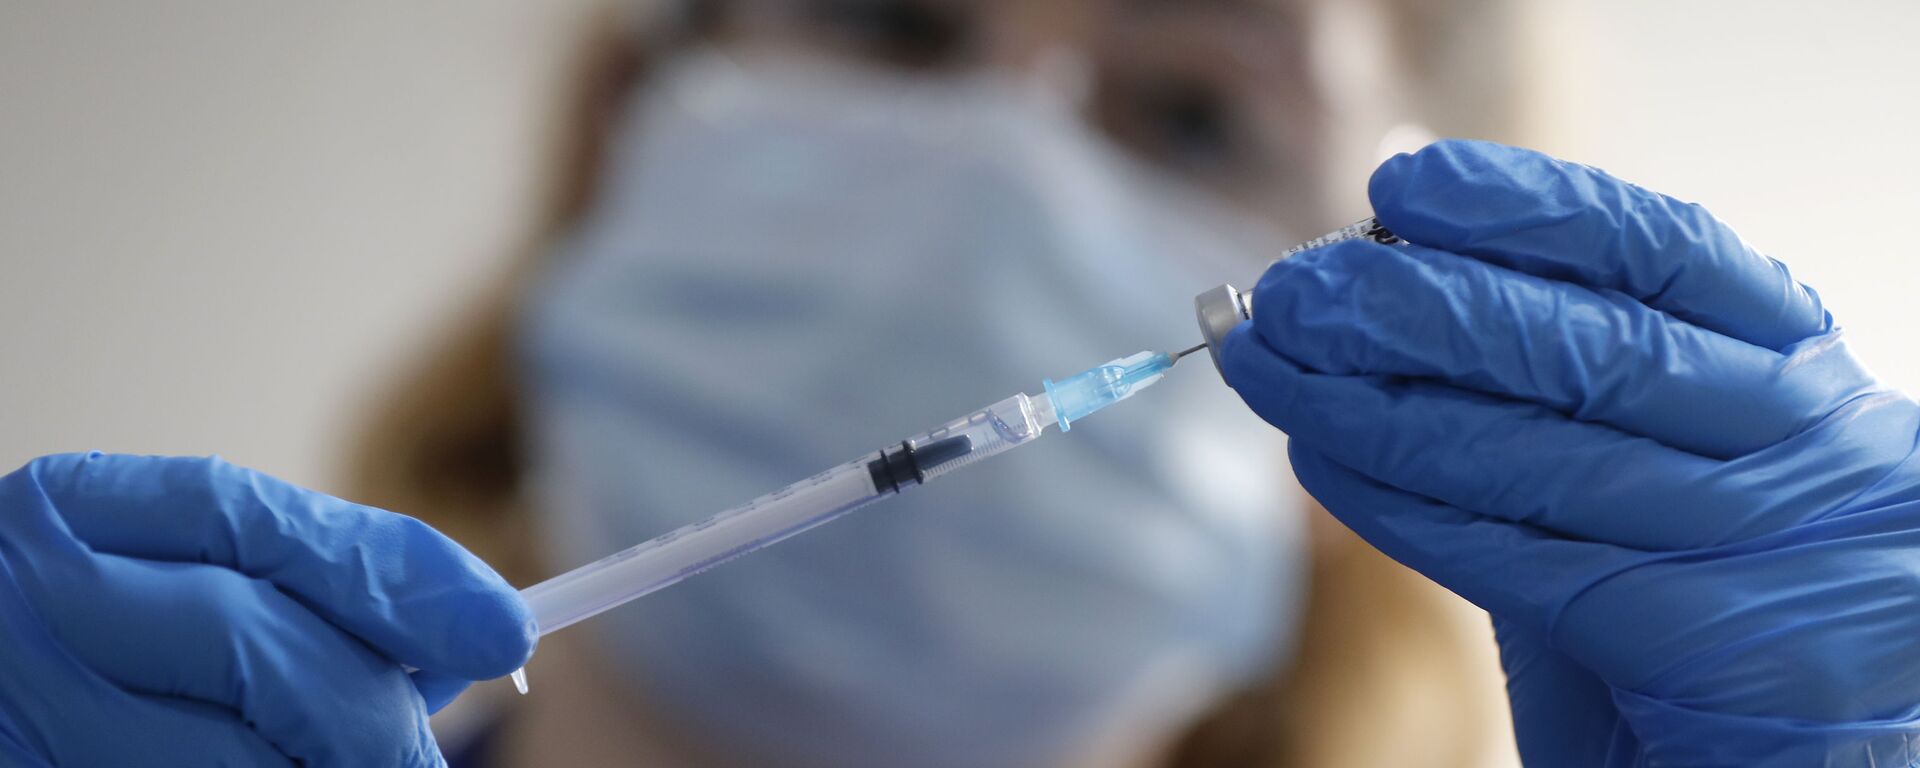 A nurse prepares to administer the Pfizer-BioNTech COVID-19 vaccine at Guy's Hospital in London, Tuesday, Dec. 8, 2020 - Sputnik International, 1920, 04.02.2021